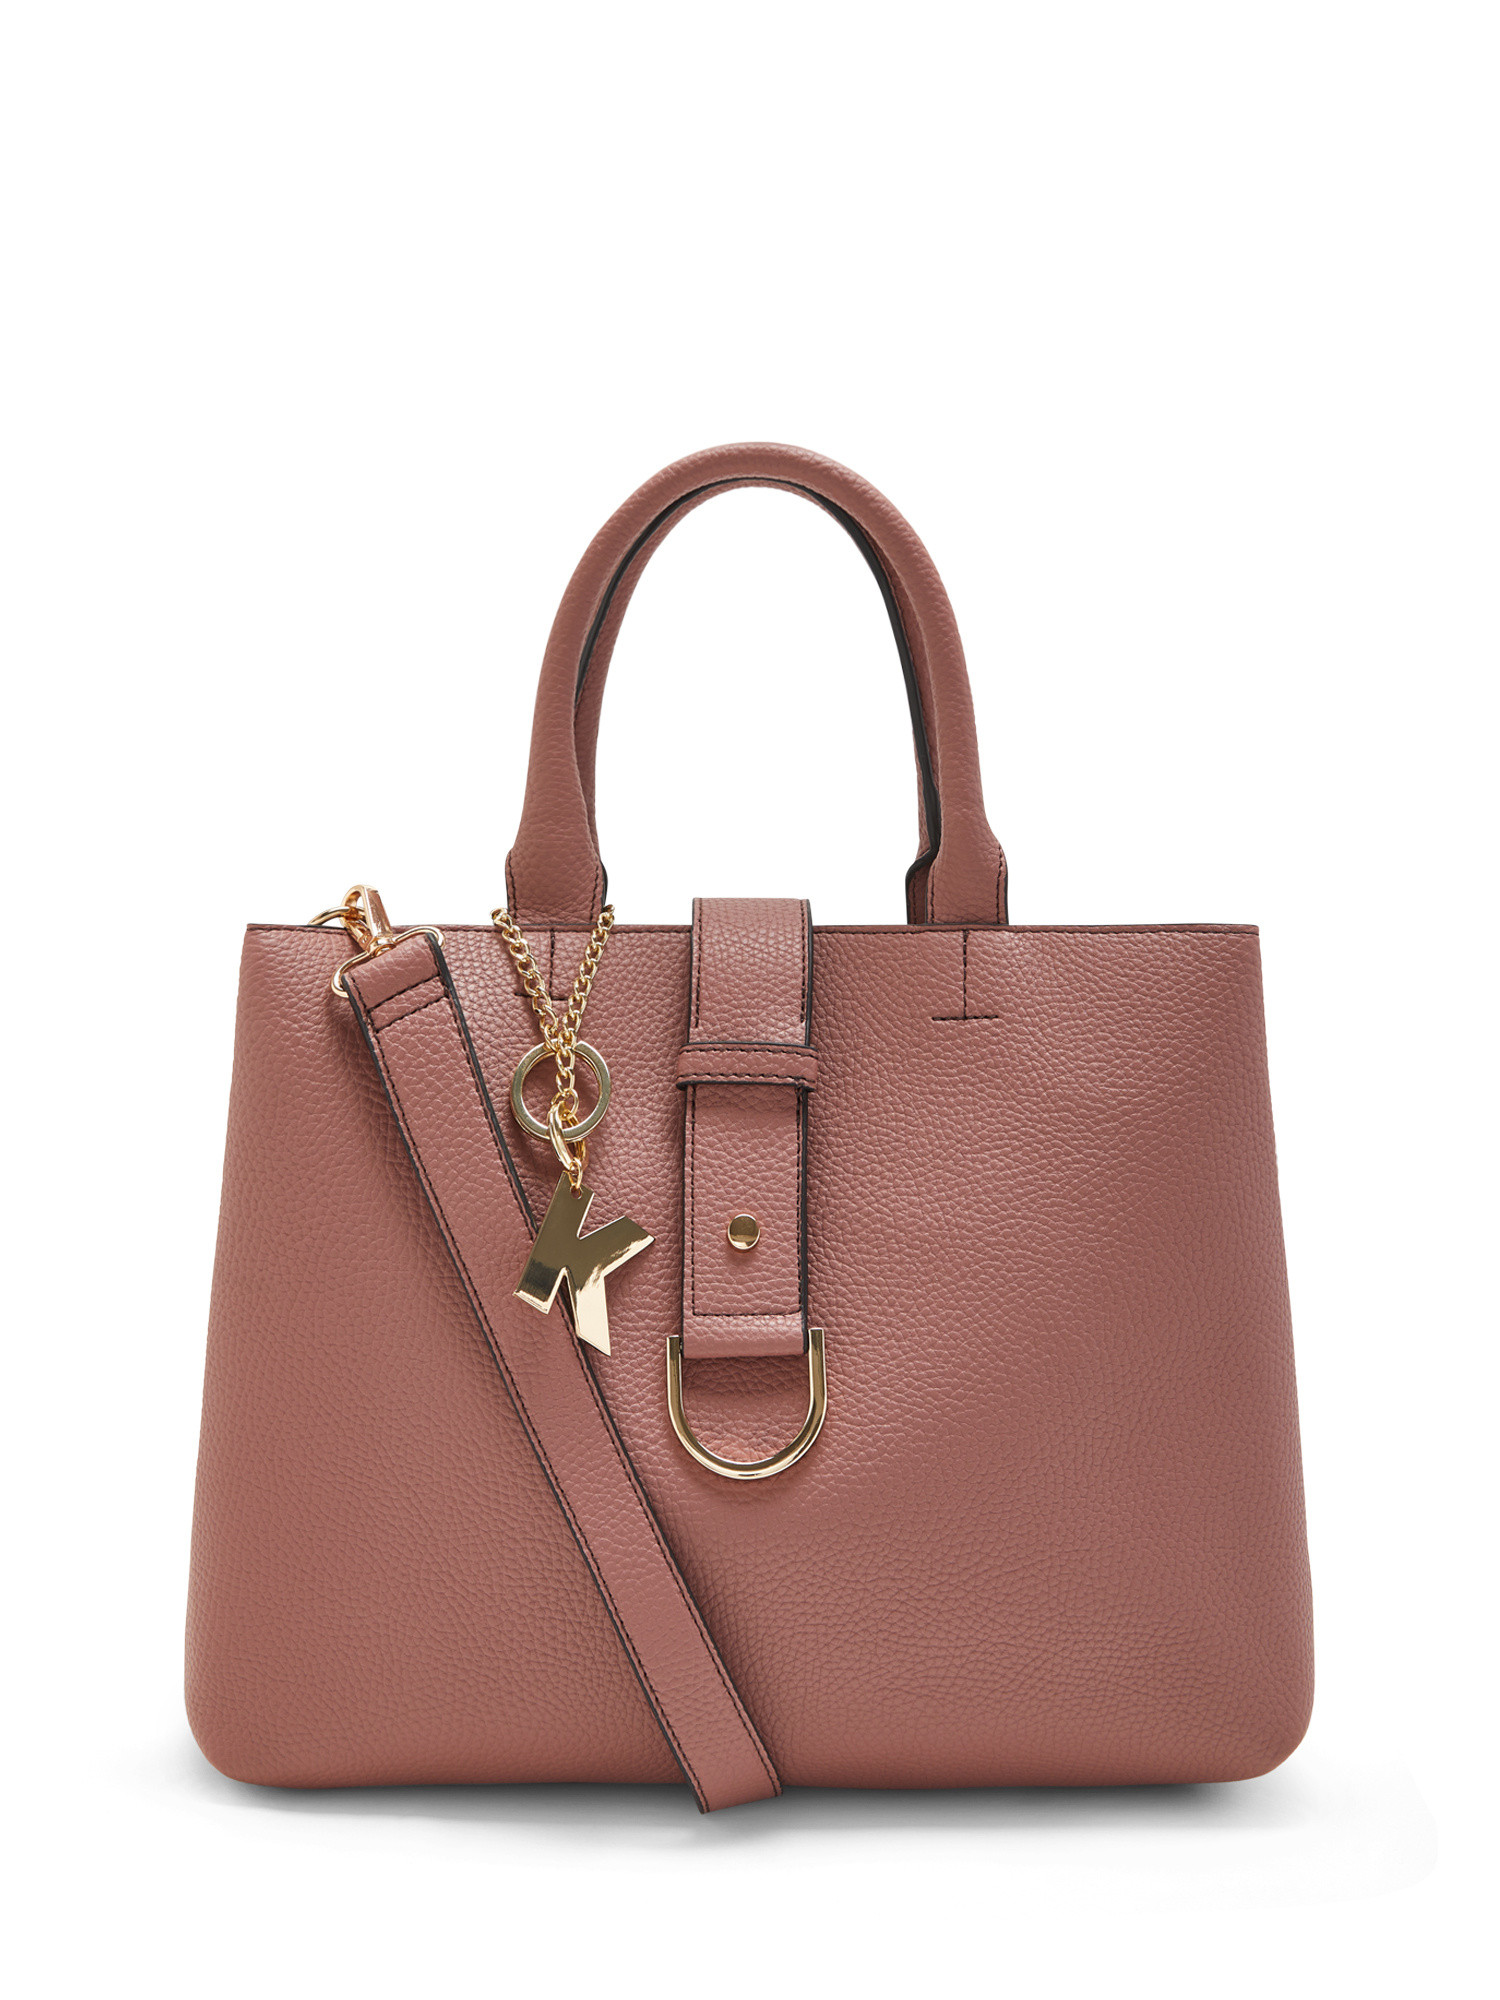 Koan - Shopping bag with charm, Dark Pink, large image number 0